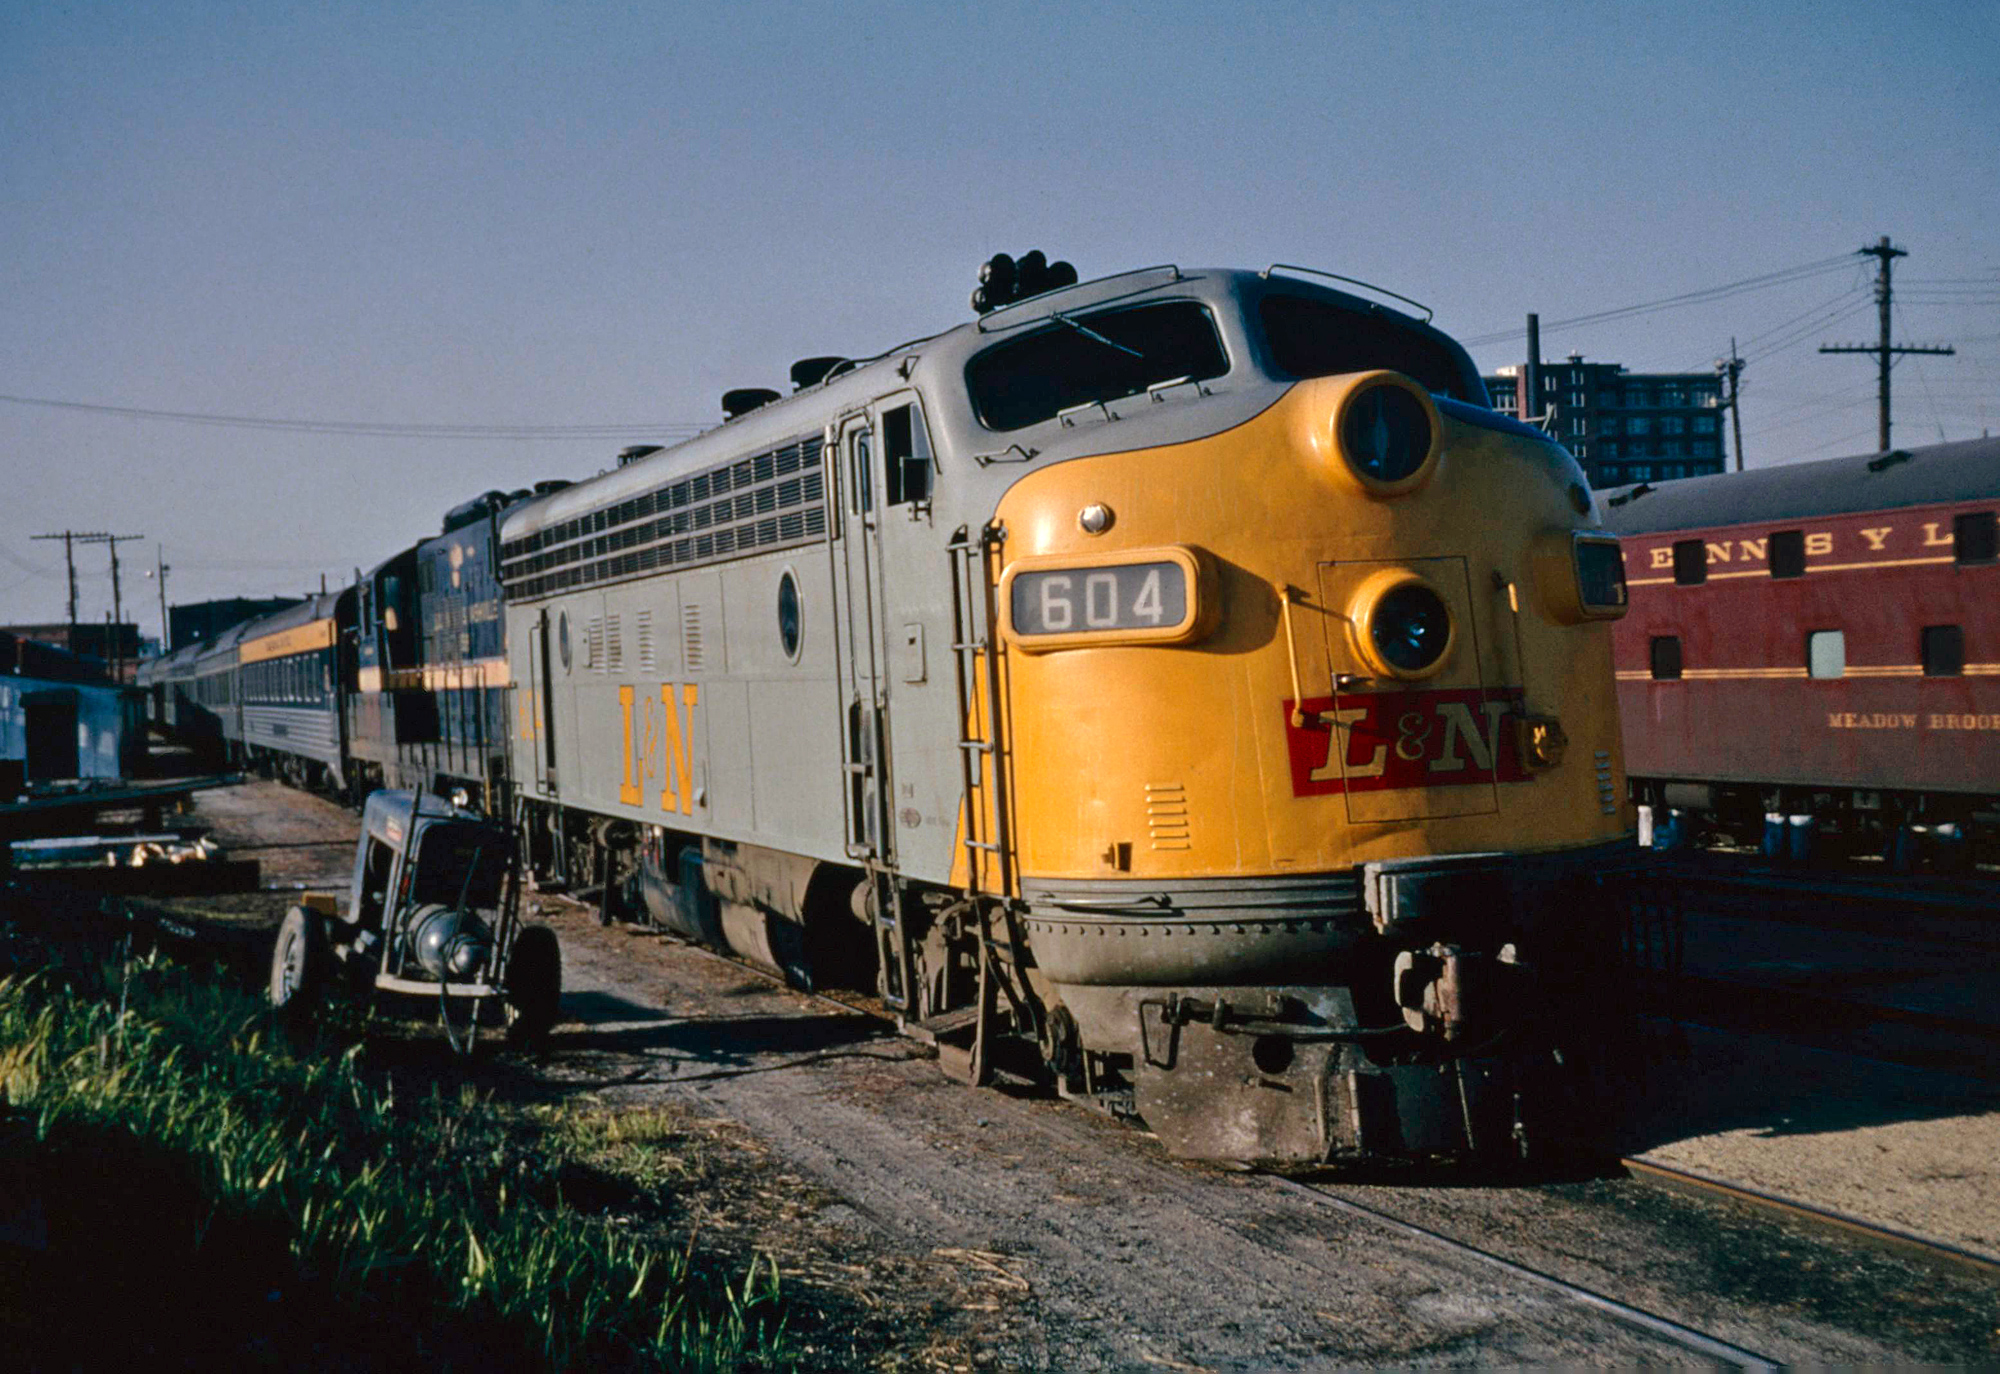 1974 Louisville Nashville Rail Road Locomotive Vintage Train Photo 11" x 17" 